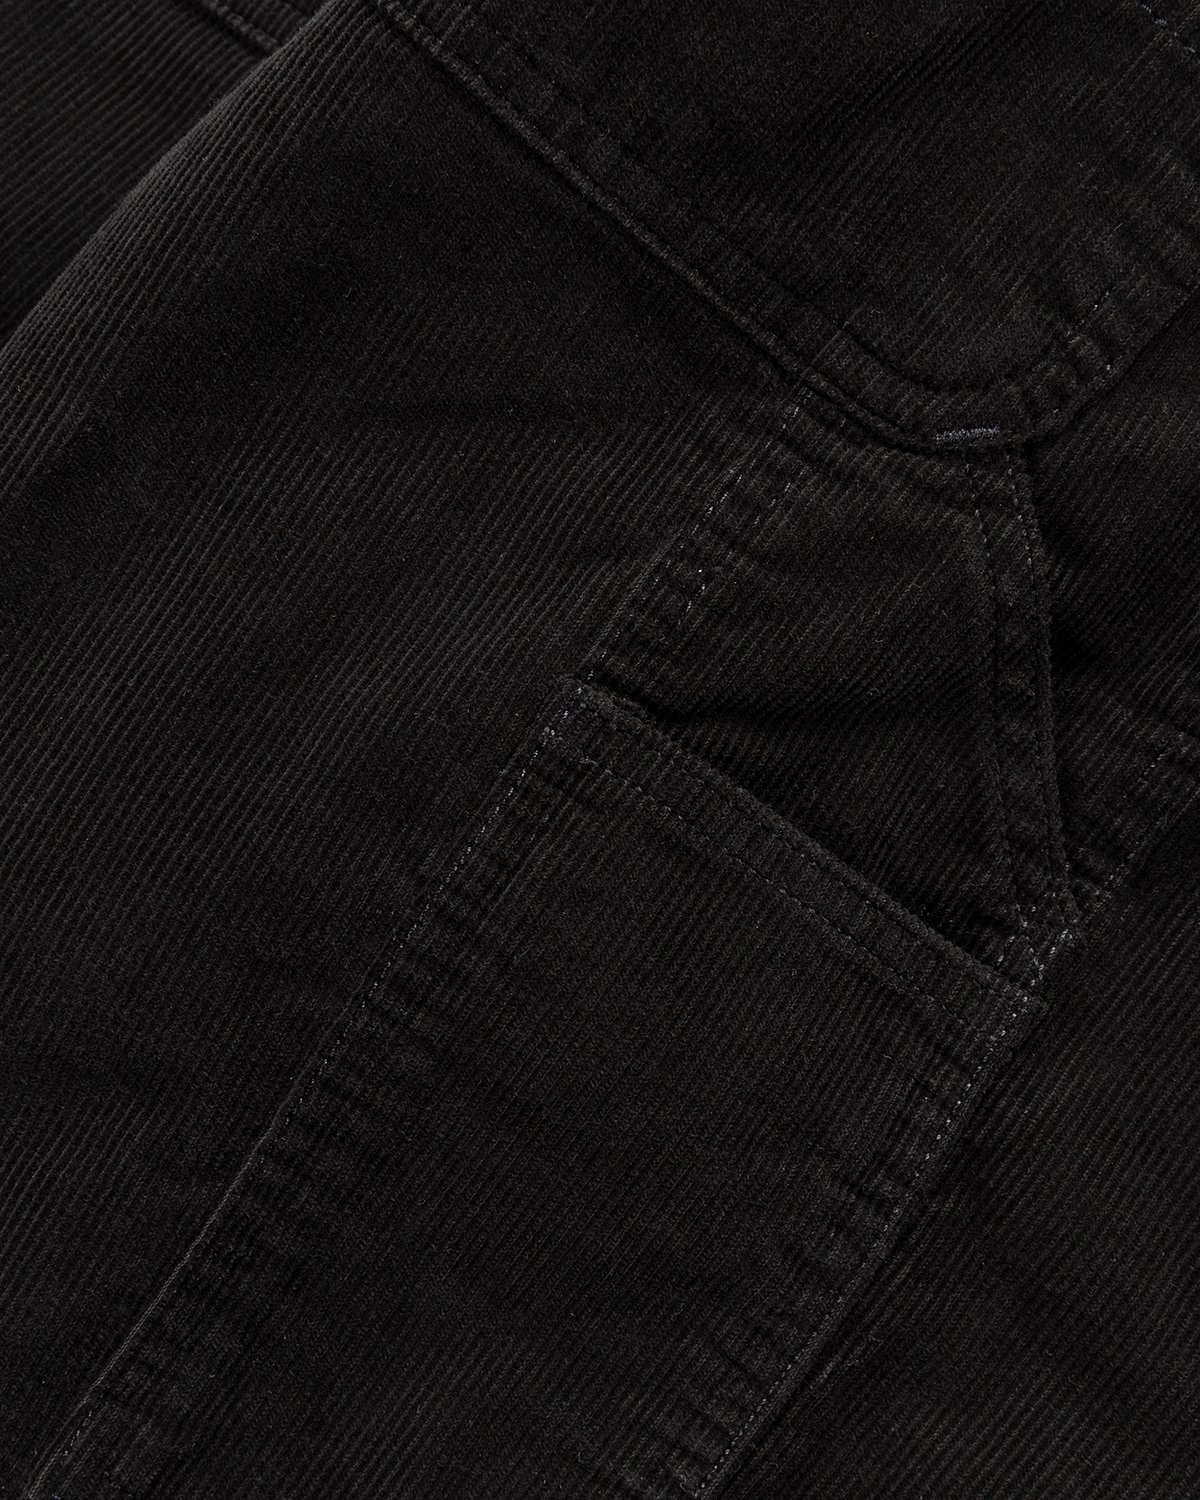 Carhartt WIP - Flint Short Black Rinsed - Clothing - Black - Image 5